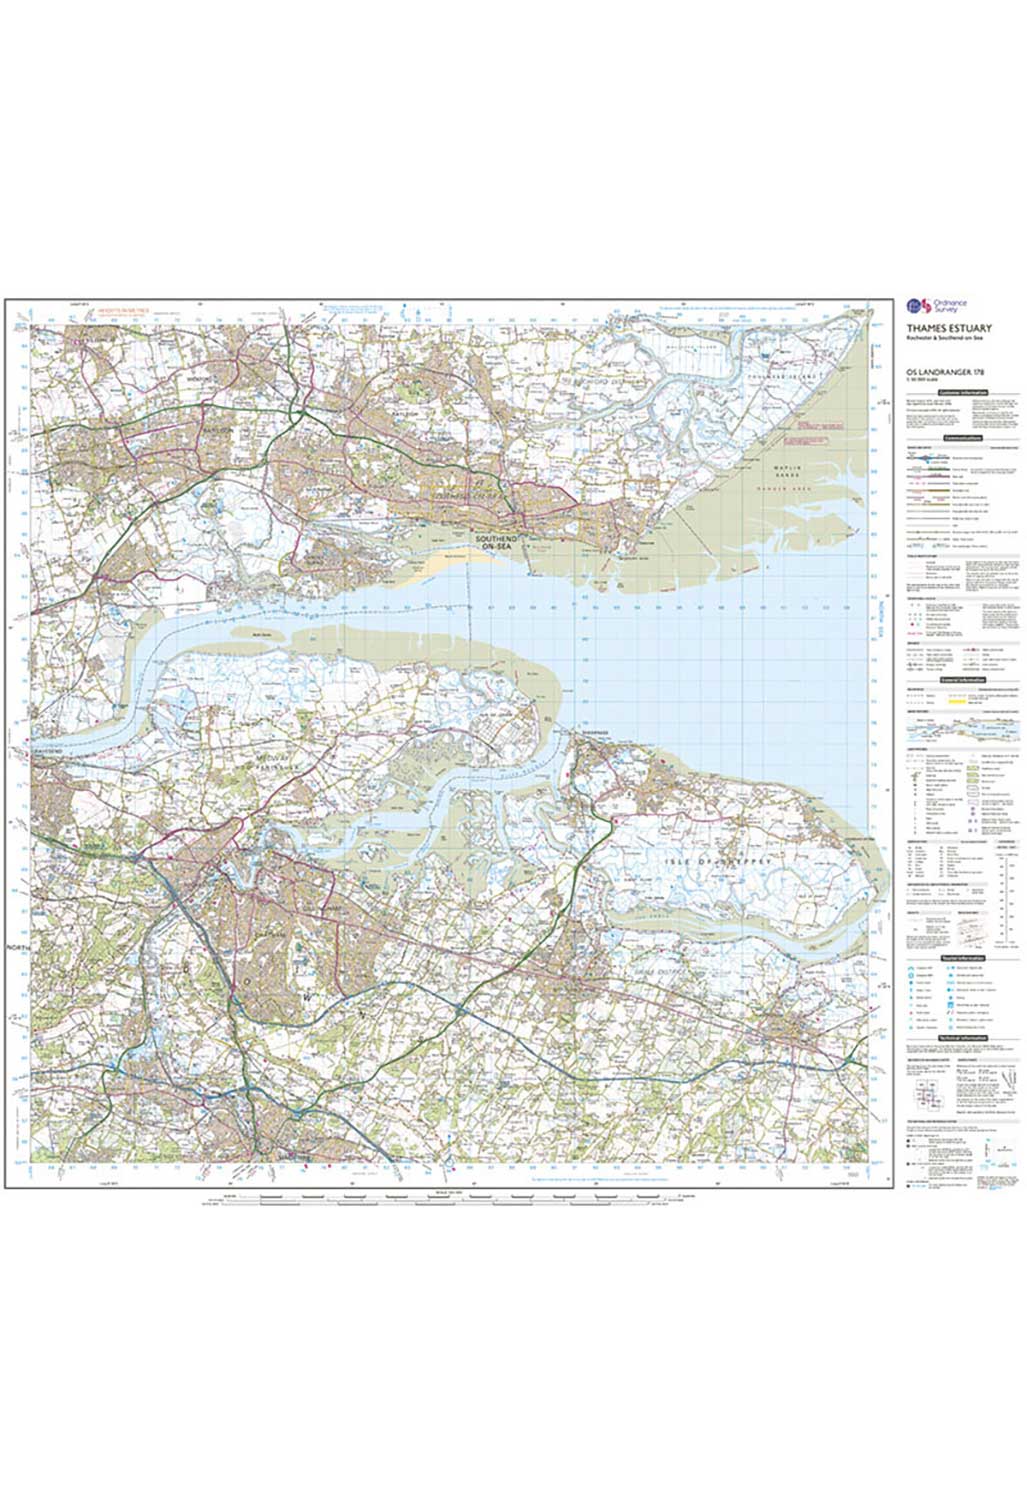 Ordnance Survey Thames Estuary, Rochester & Southend-on-Sea - Landranger 178 Map